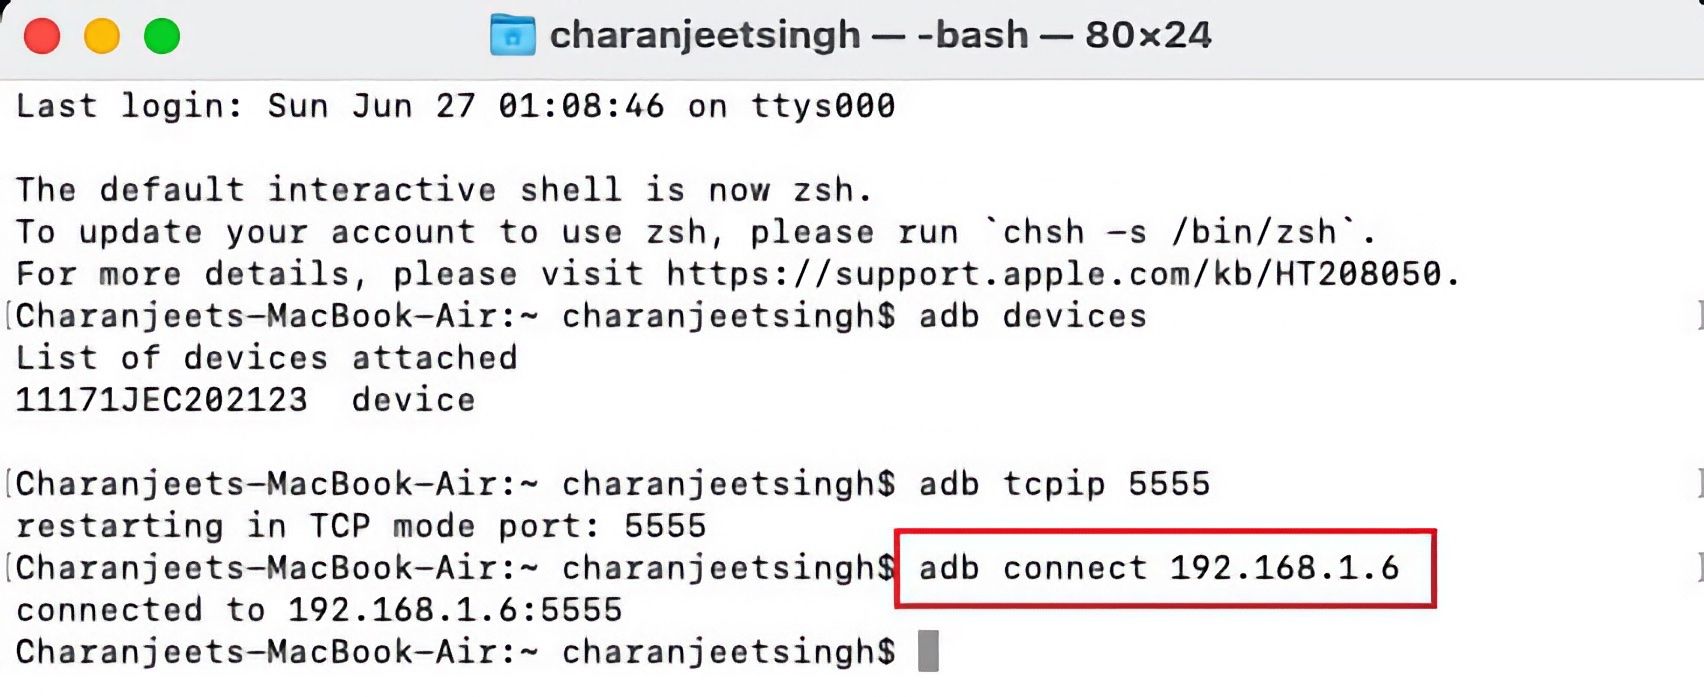 ADB connection uisng IP address